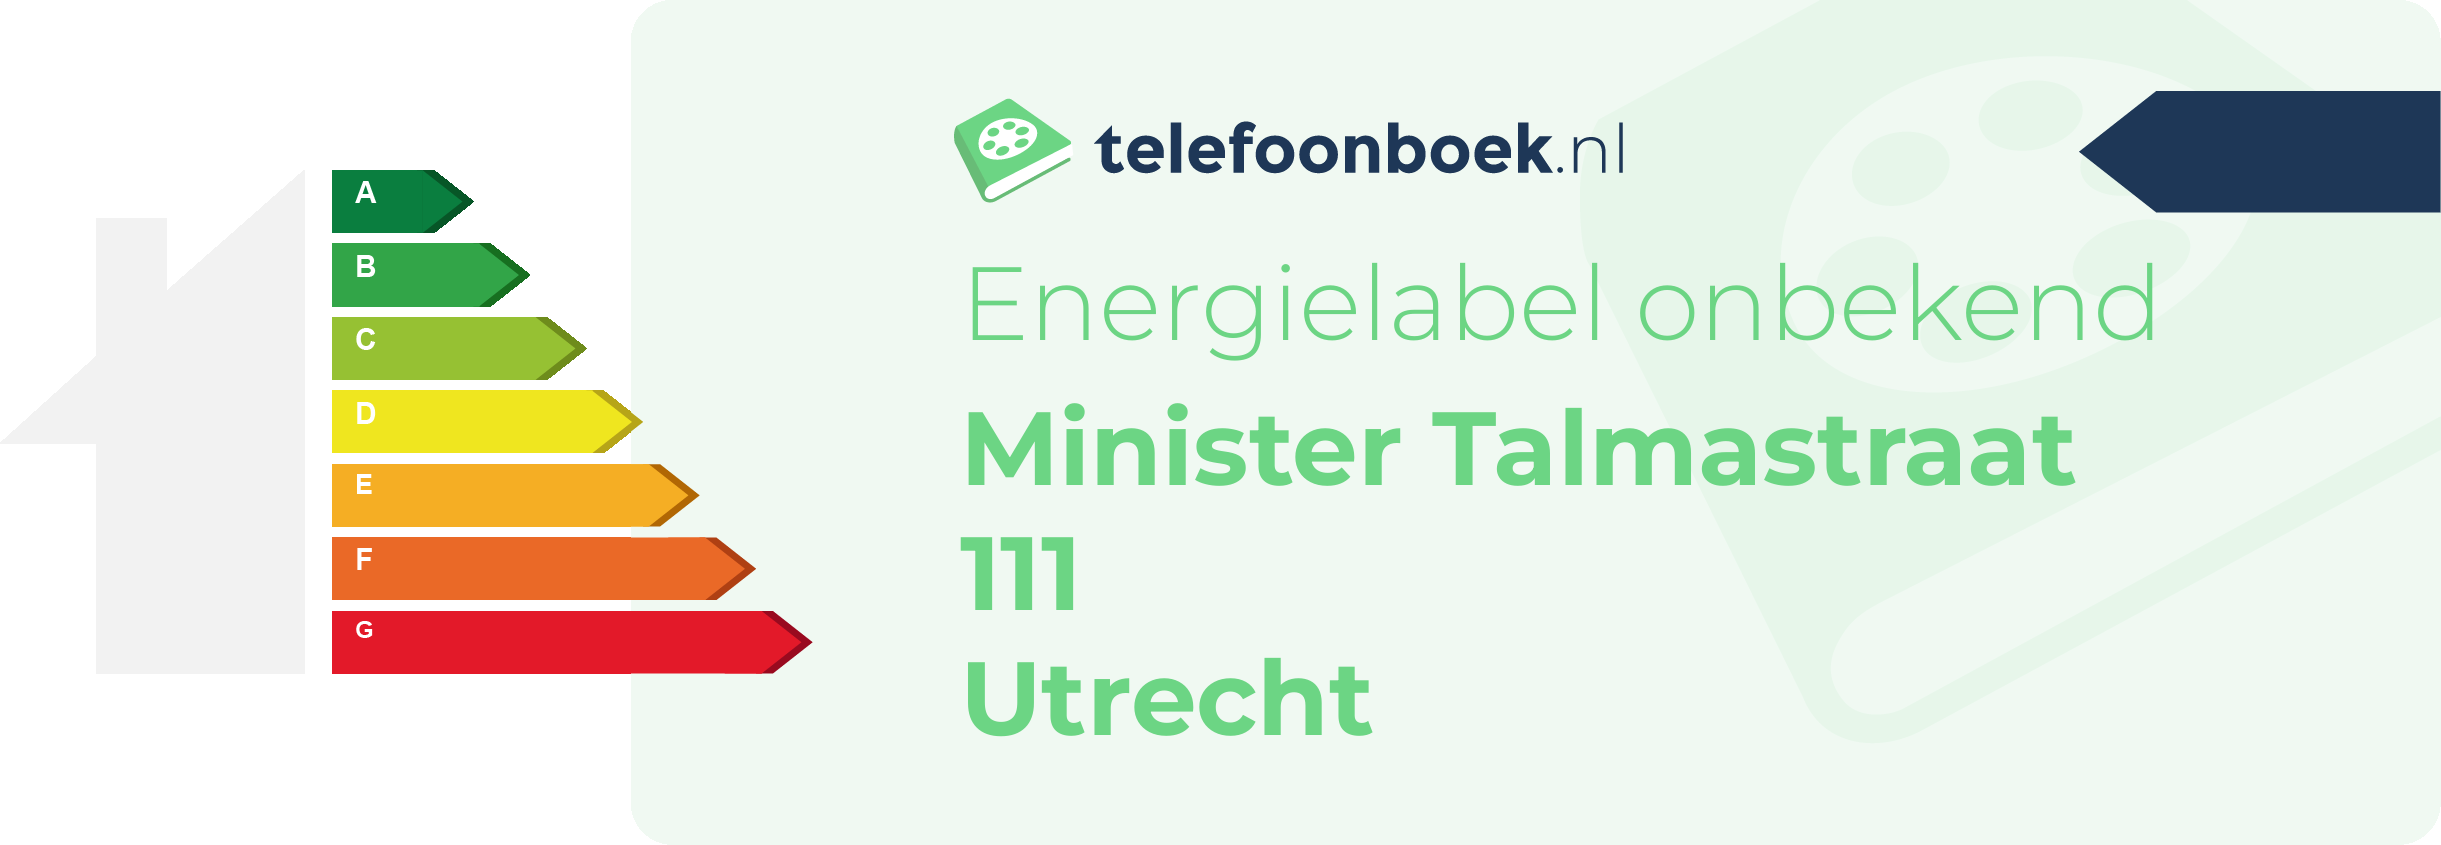 Energielabel Minister Talmastraat 111 Utrecht